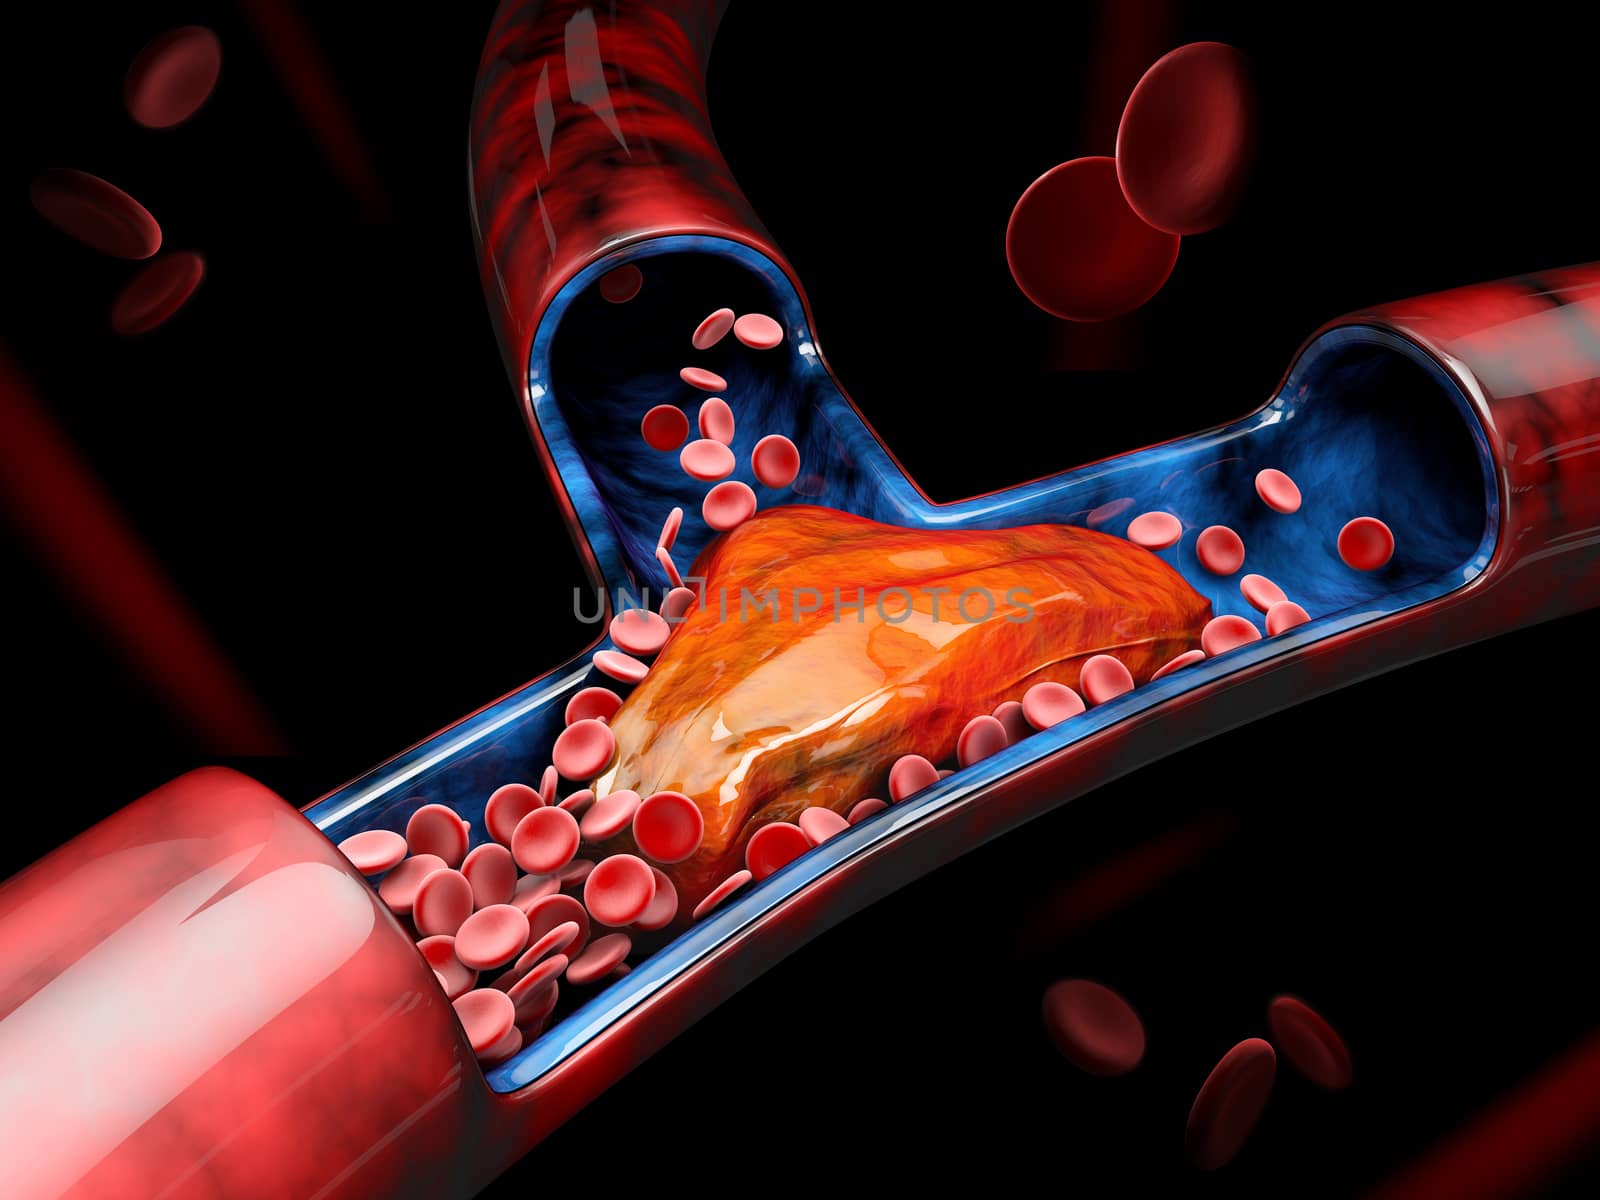 3d Illustration of Deep Vein Thrombosis or Blood Clots. Embolism.